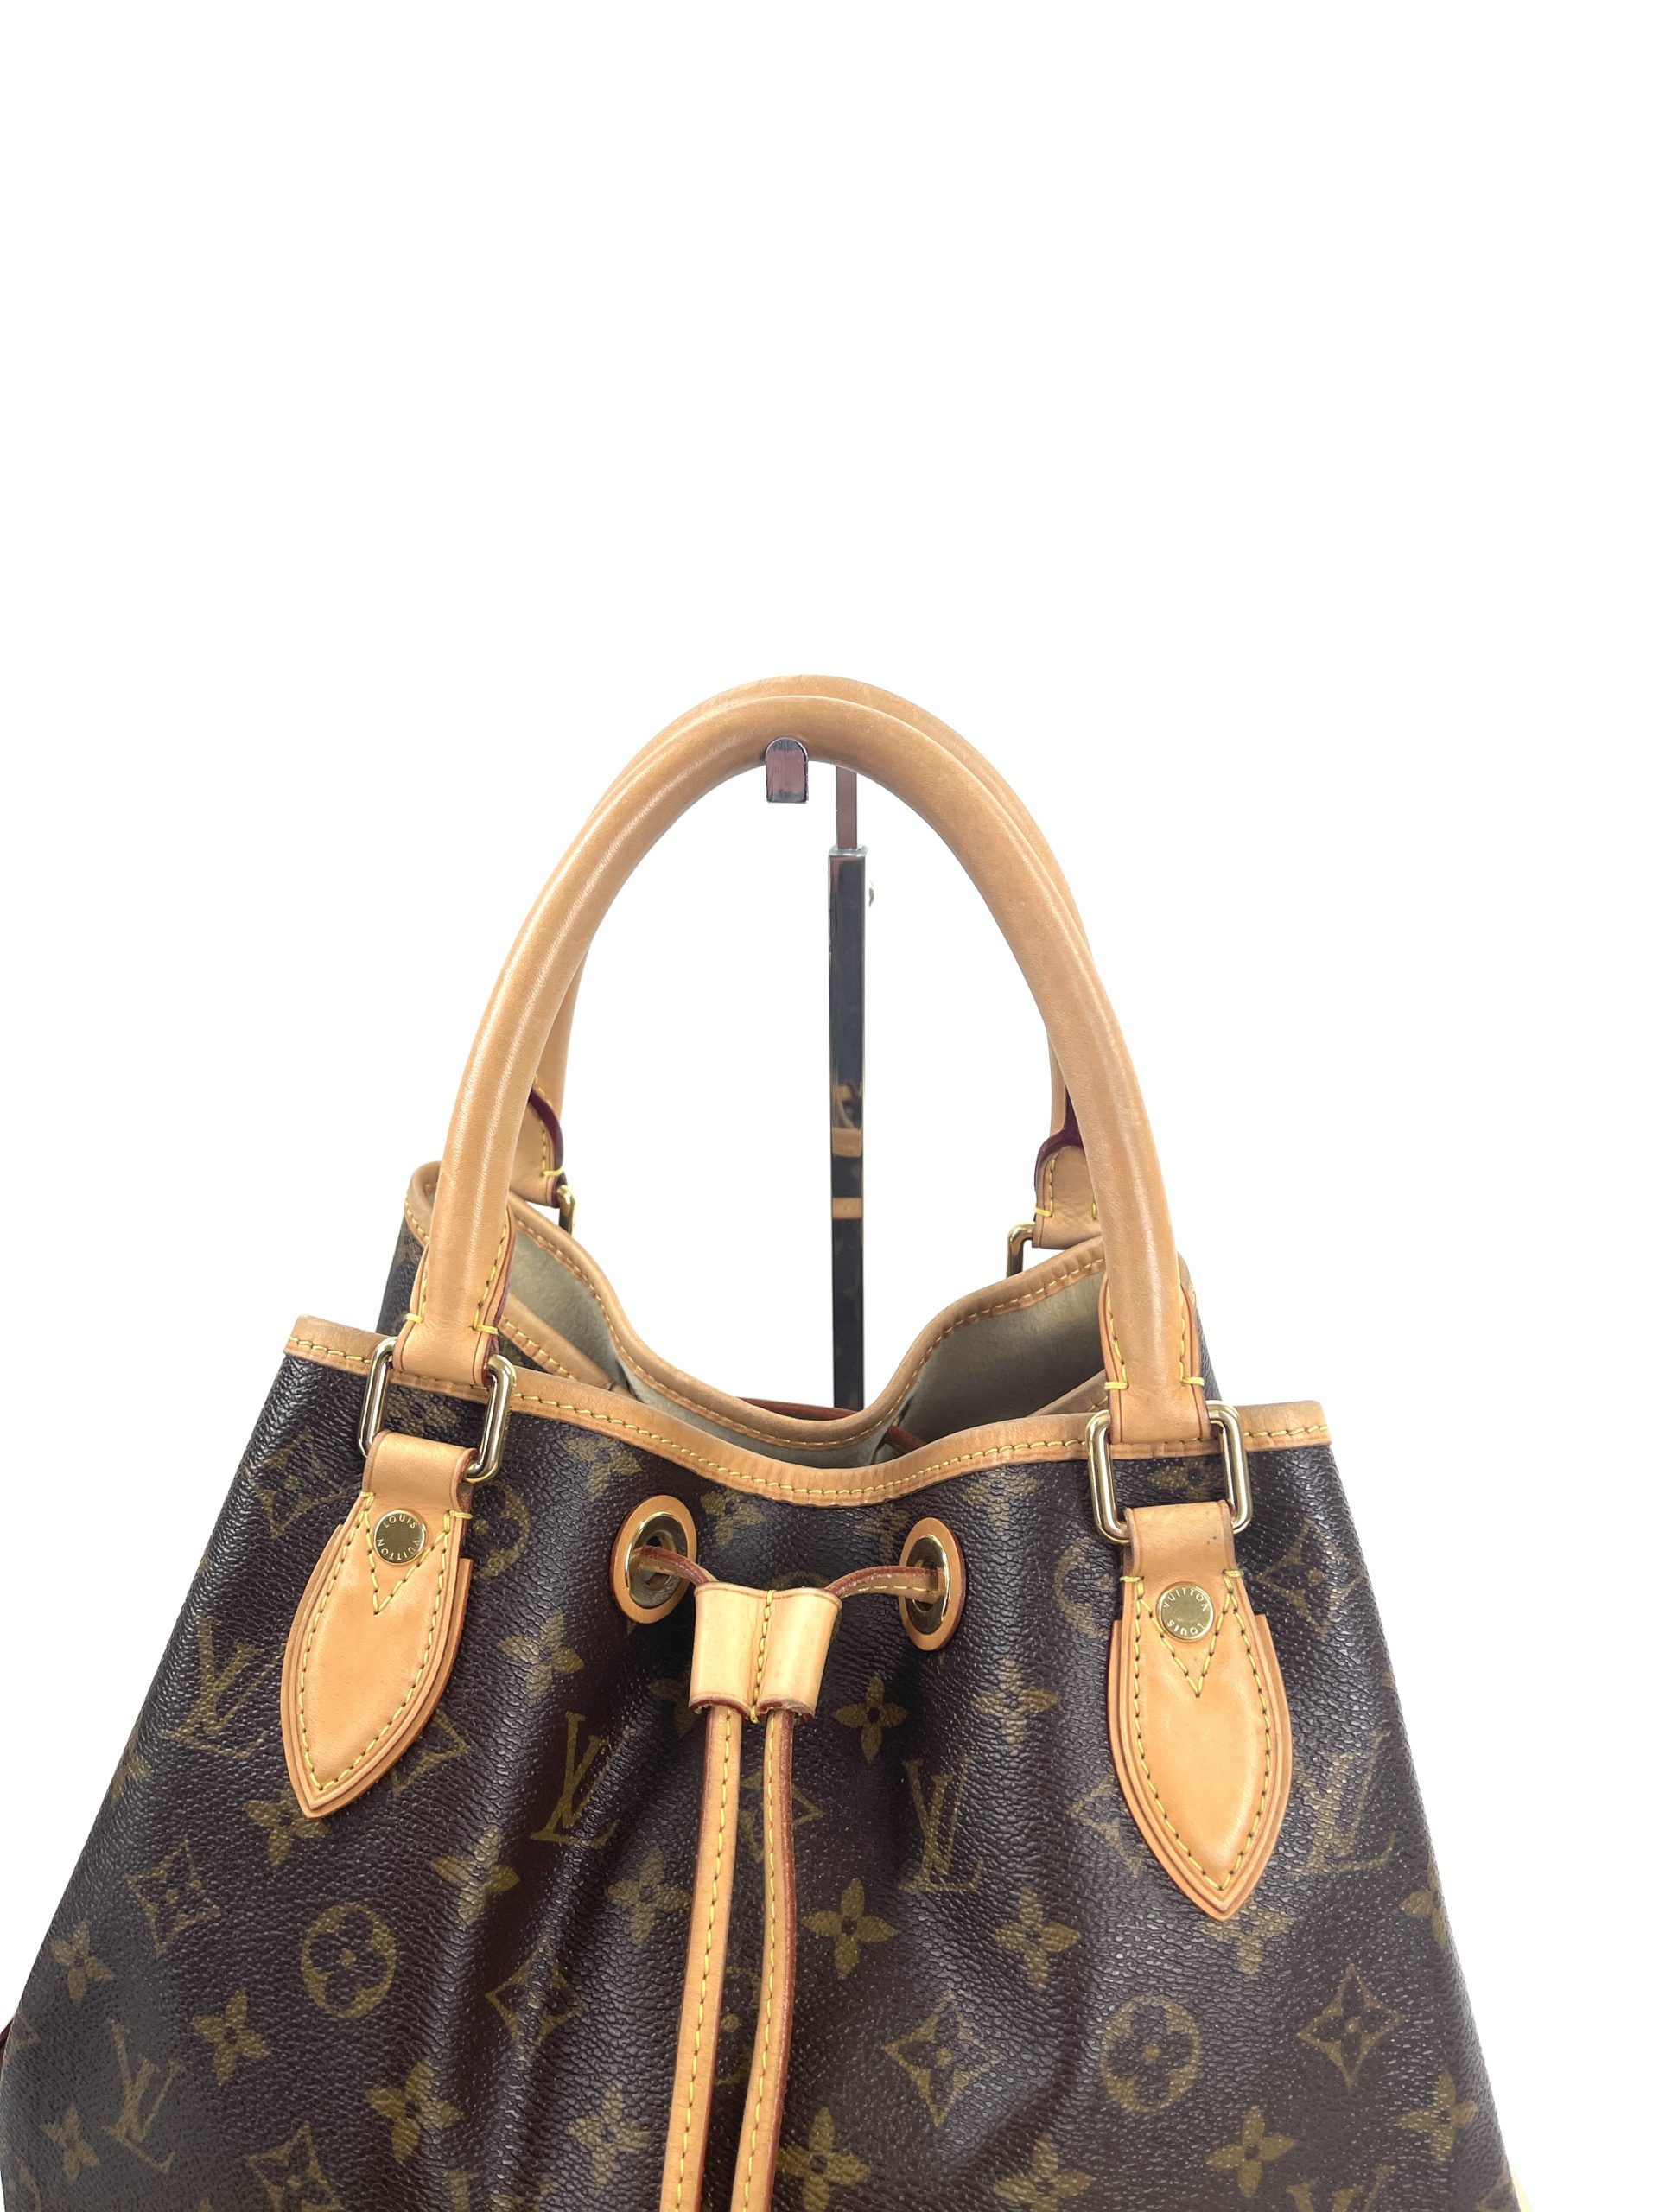 Louis Vuitton Monogram Eden Noe 2 Way Bag Limited Edition - A